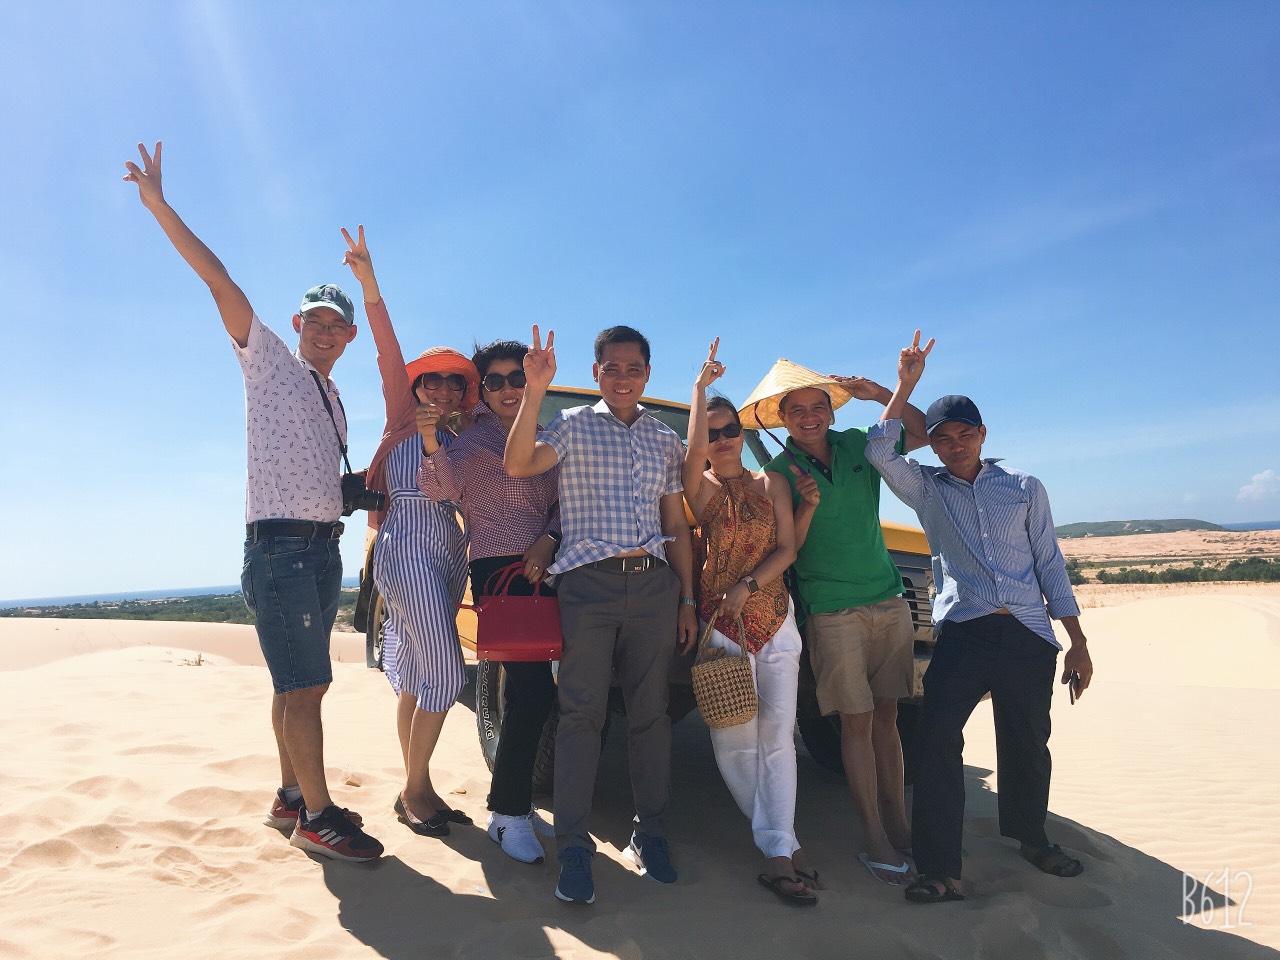 Muine Sand Dunes Sunrise Tour 1 Day From Ho Chi Minh